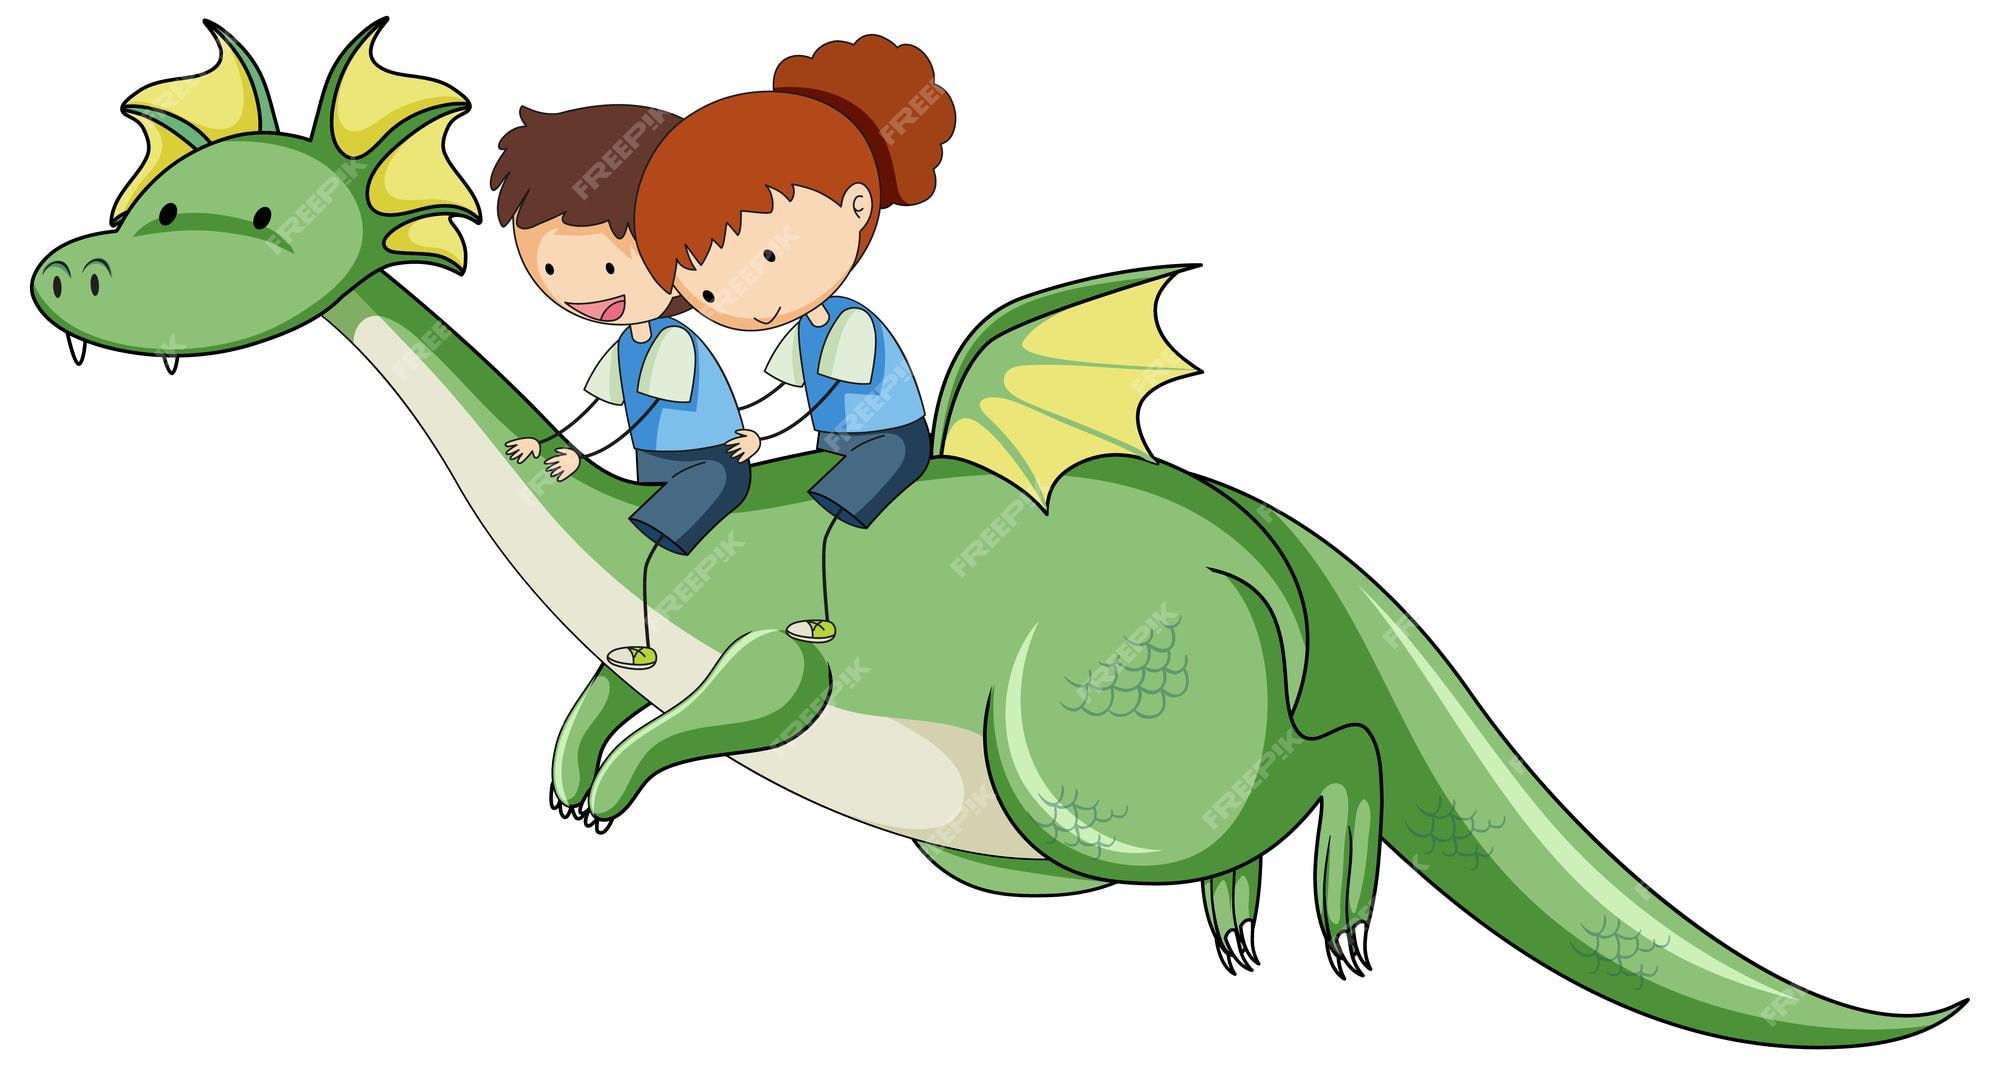 Free Vector | Little kids riding a dragon cartoon character